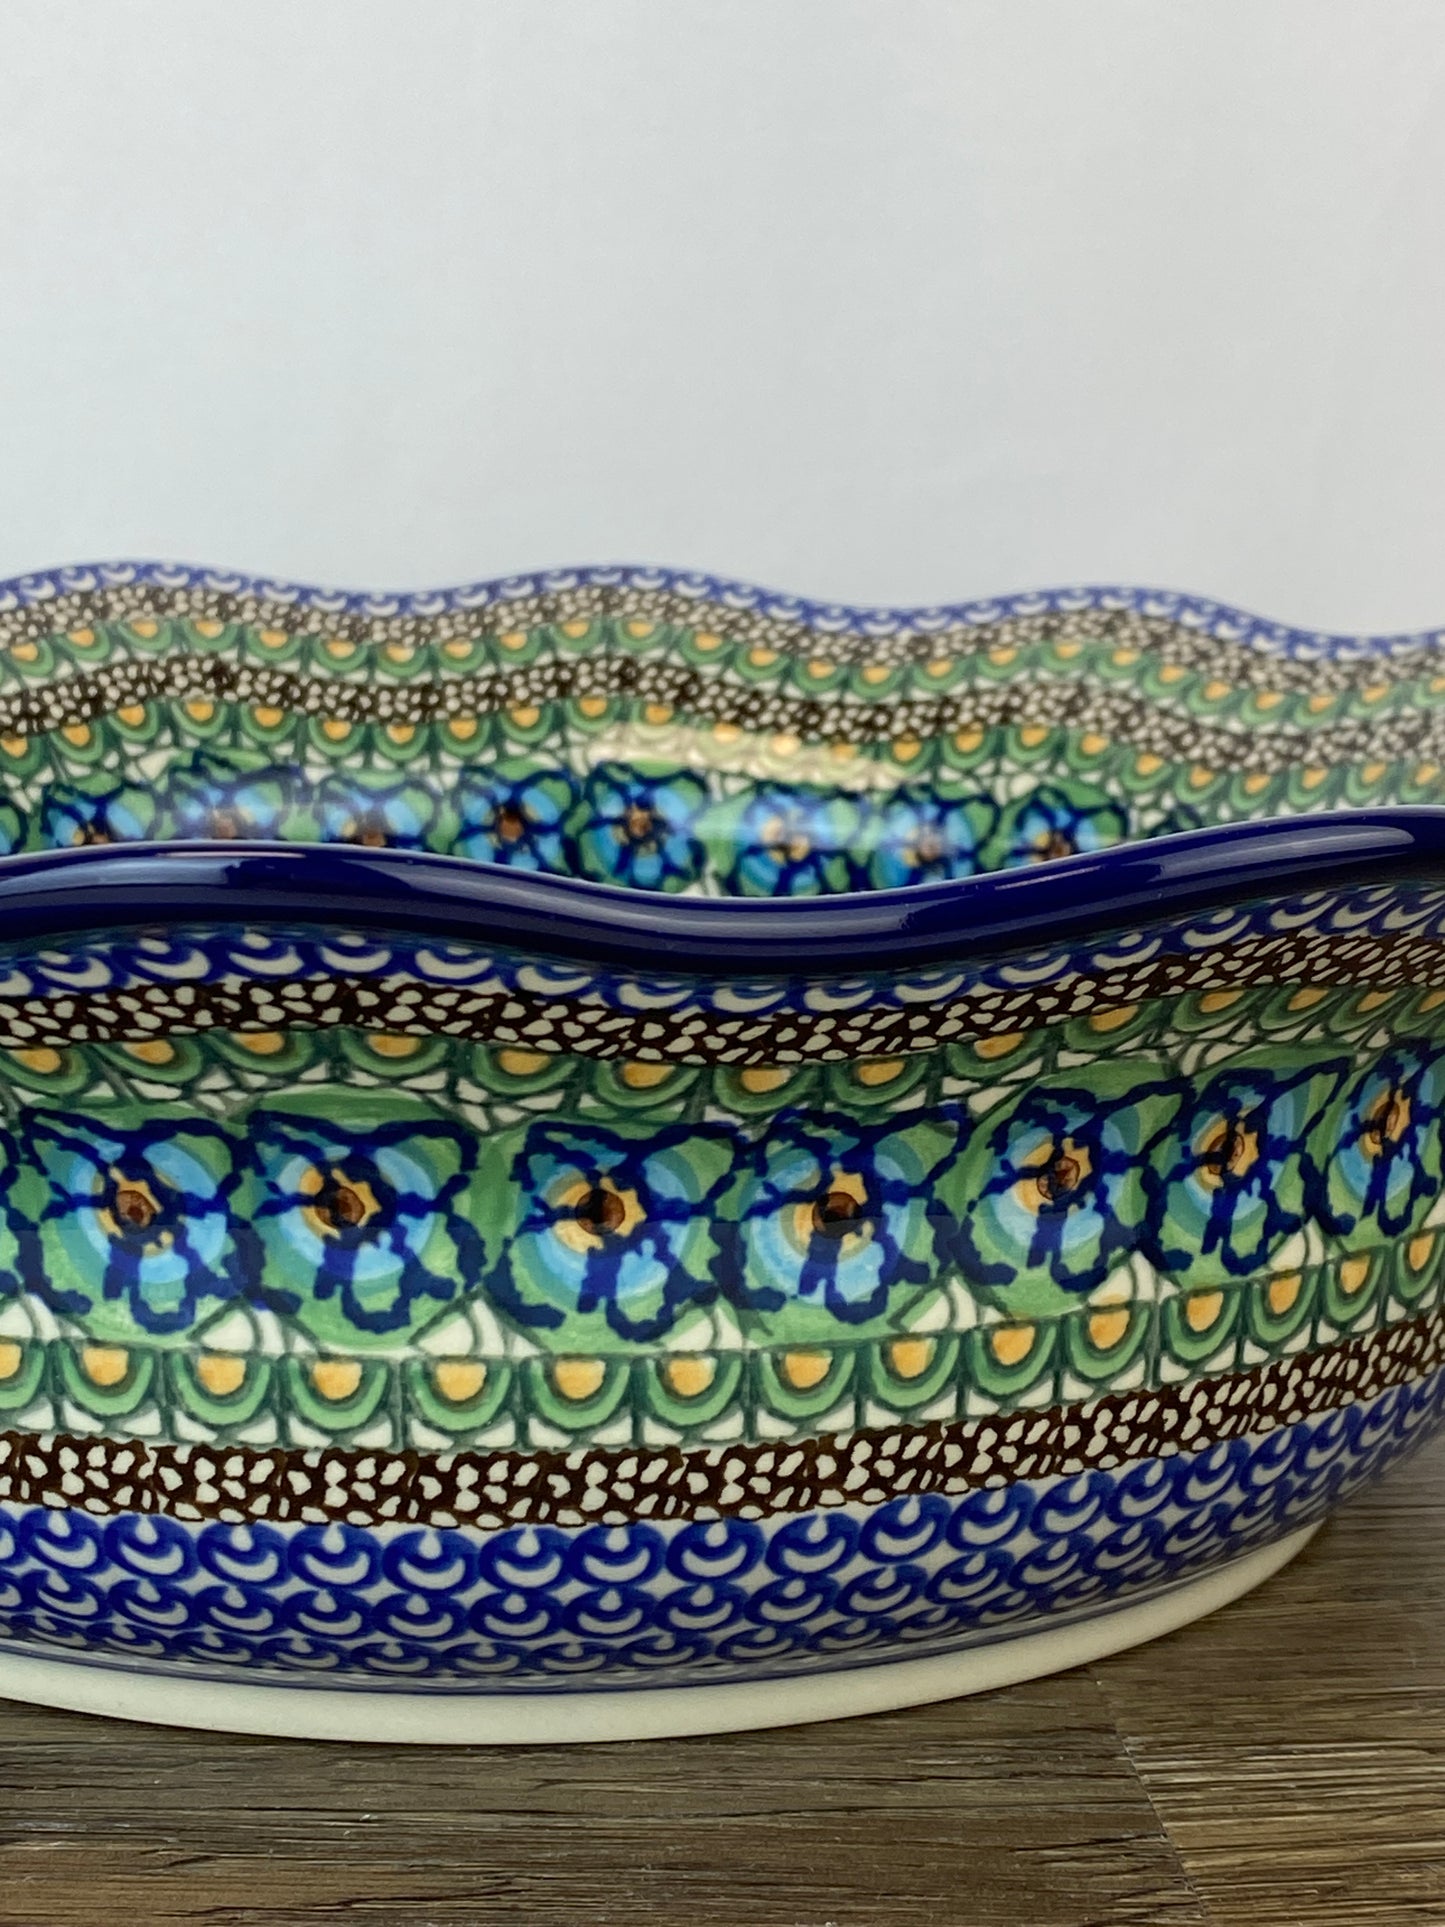 XL Unikat Flower Bowl - Shape 680 - Pattern U151